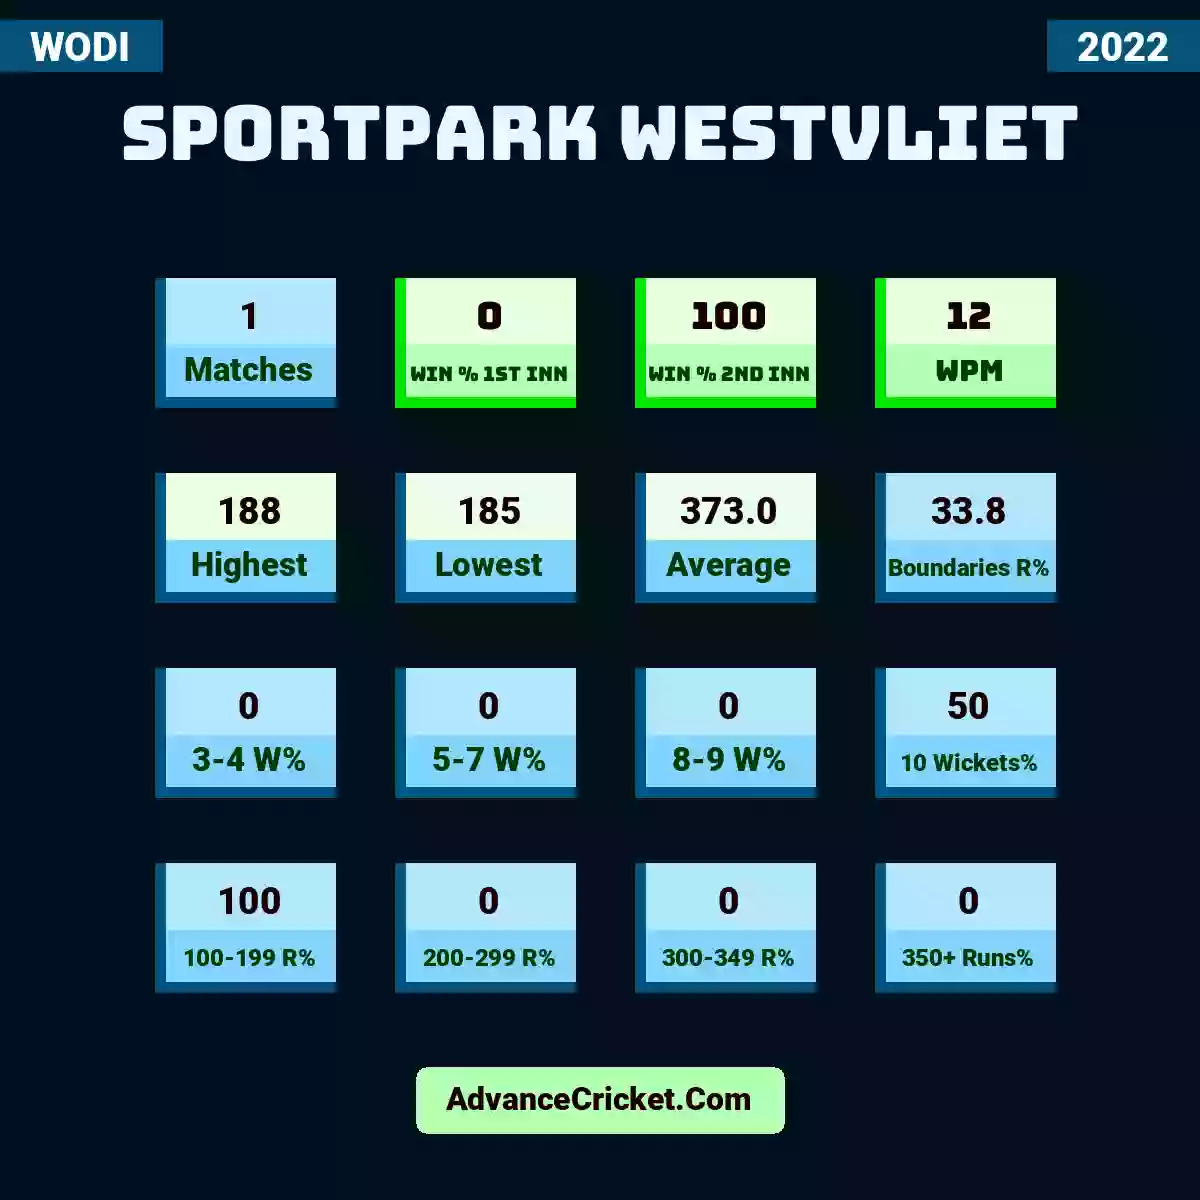 Image showing Sportpark Westvliet with Matches: 1, Win % 1st Inn: 0, Win % 2nd Inn: 100, WPM: 12, Highest: 188, Lowest: 185, Average: 373.0, Boundaries R%: 33.8, 3-4 W%: 0, 5-7 W%: 0, 8-9 W%: 0, 10 Wickets%: 50, 100-199 R%: 100, 200-299 R%: 0, 300-349 R%: 0, 350+ Runs%: 0.